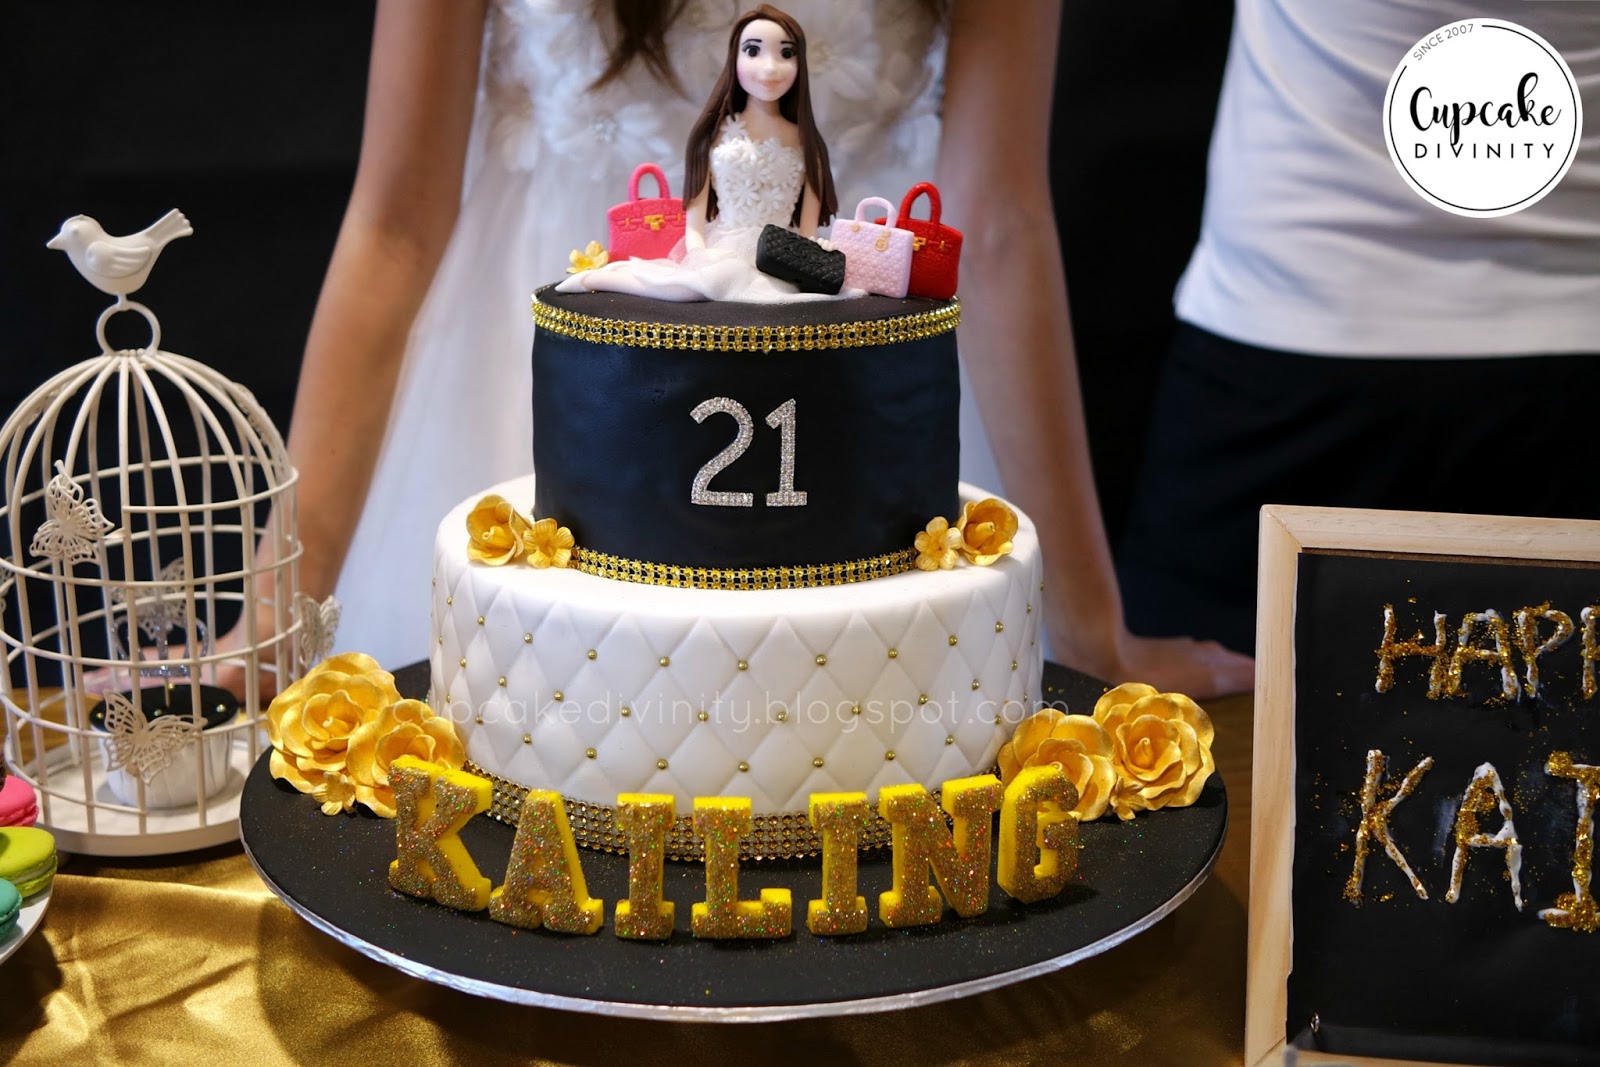 Cupcake Divinity: 21st Birthday Cake & Dessert Table